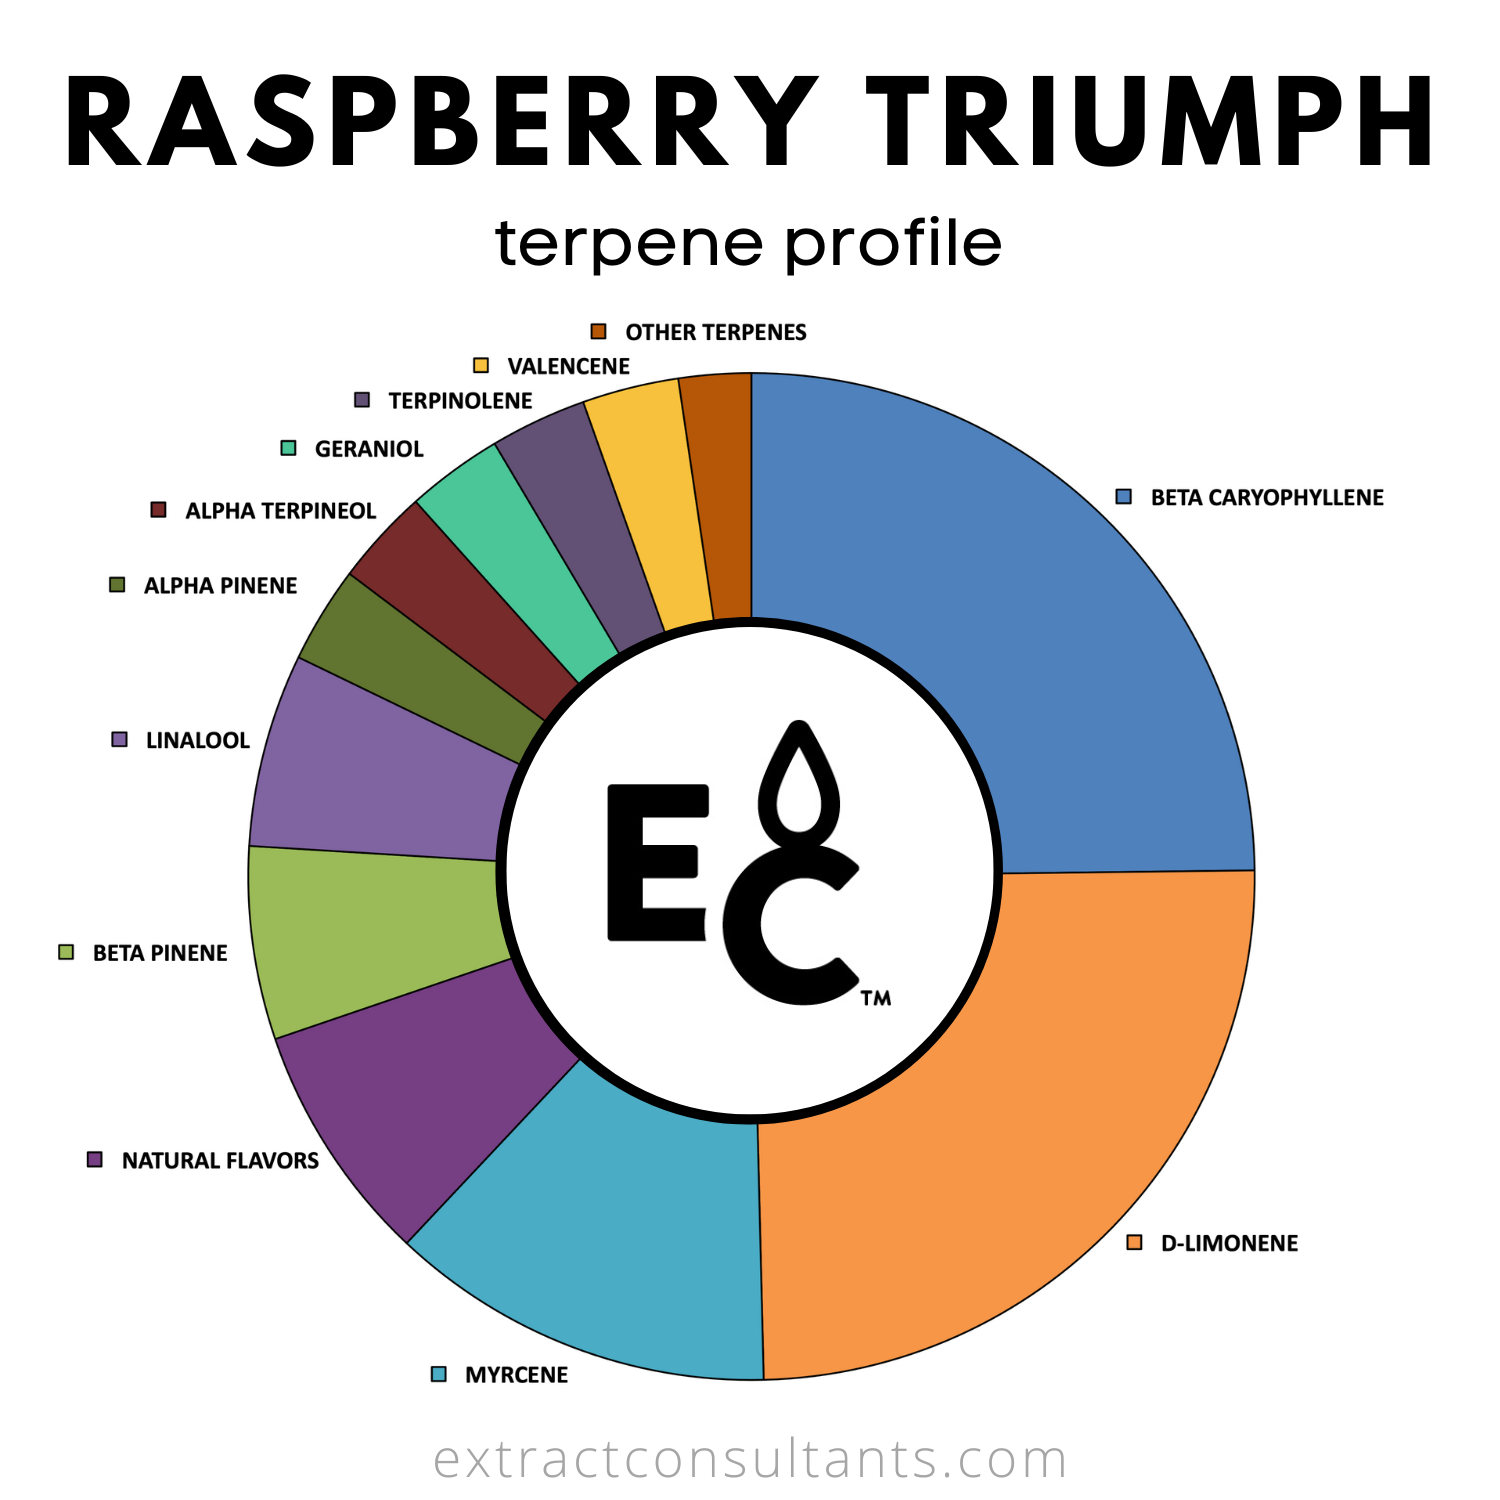 Raspberry Triumph TTB Aprobado Sabor Terpene